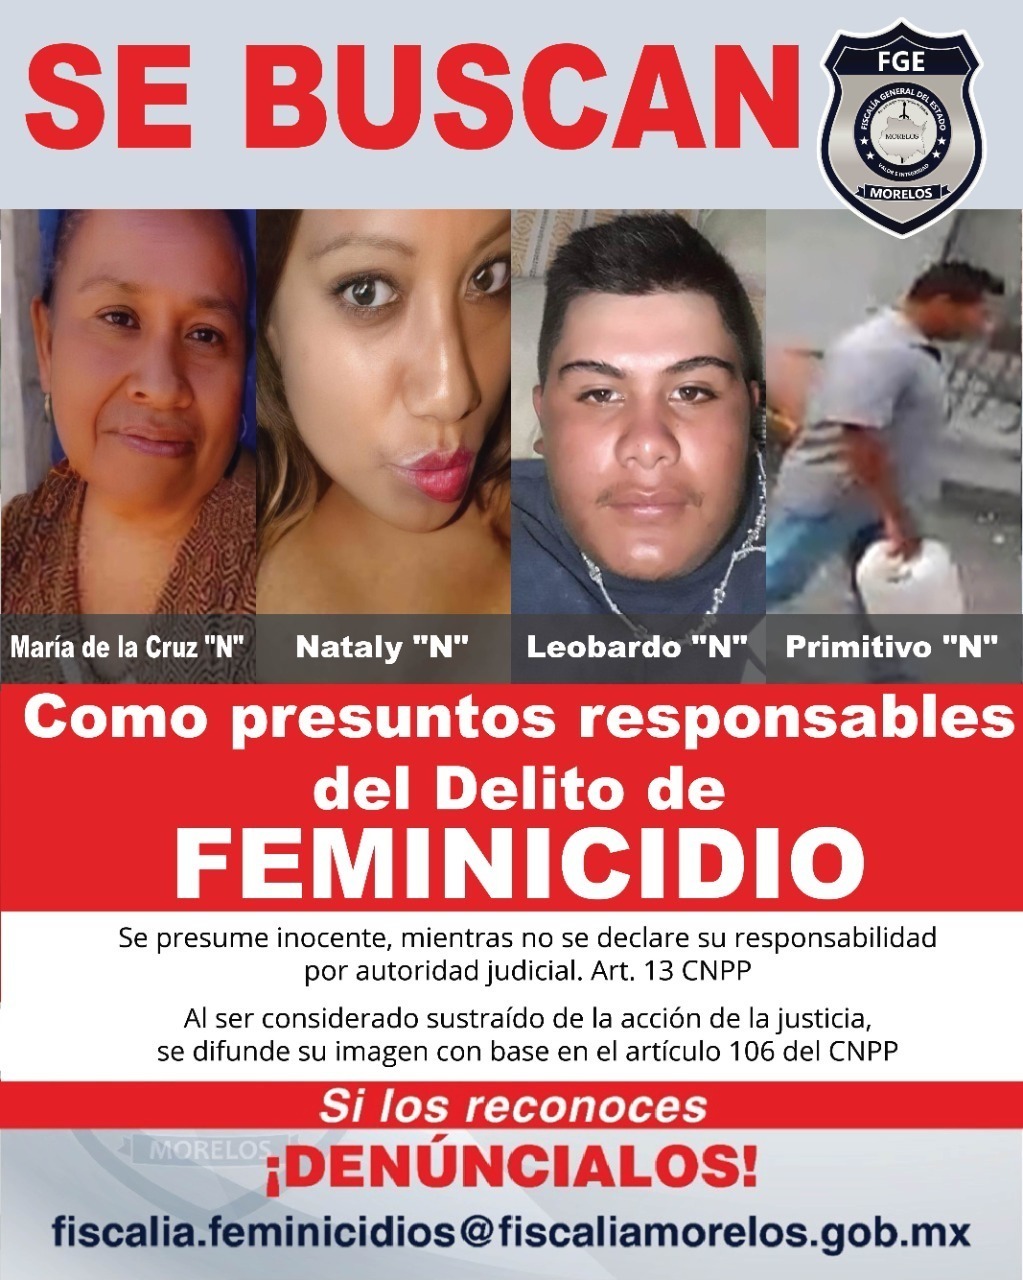 RECLASIFICAN CASO MARGARITA, SERÁ INVESTIGADO COMO FEMINICIDIO